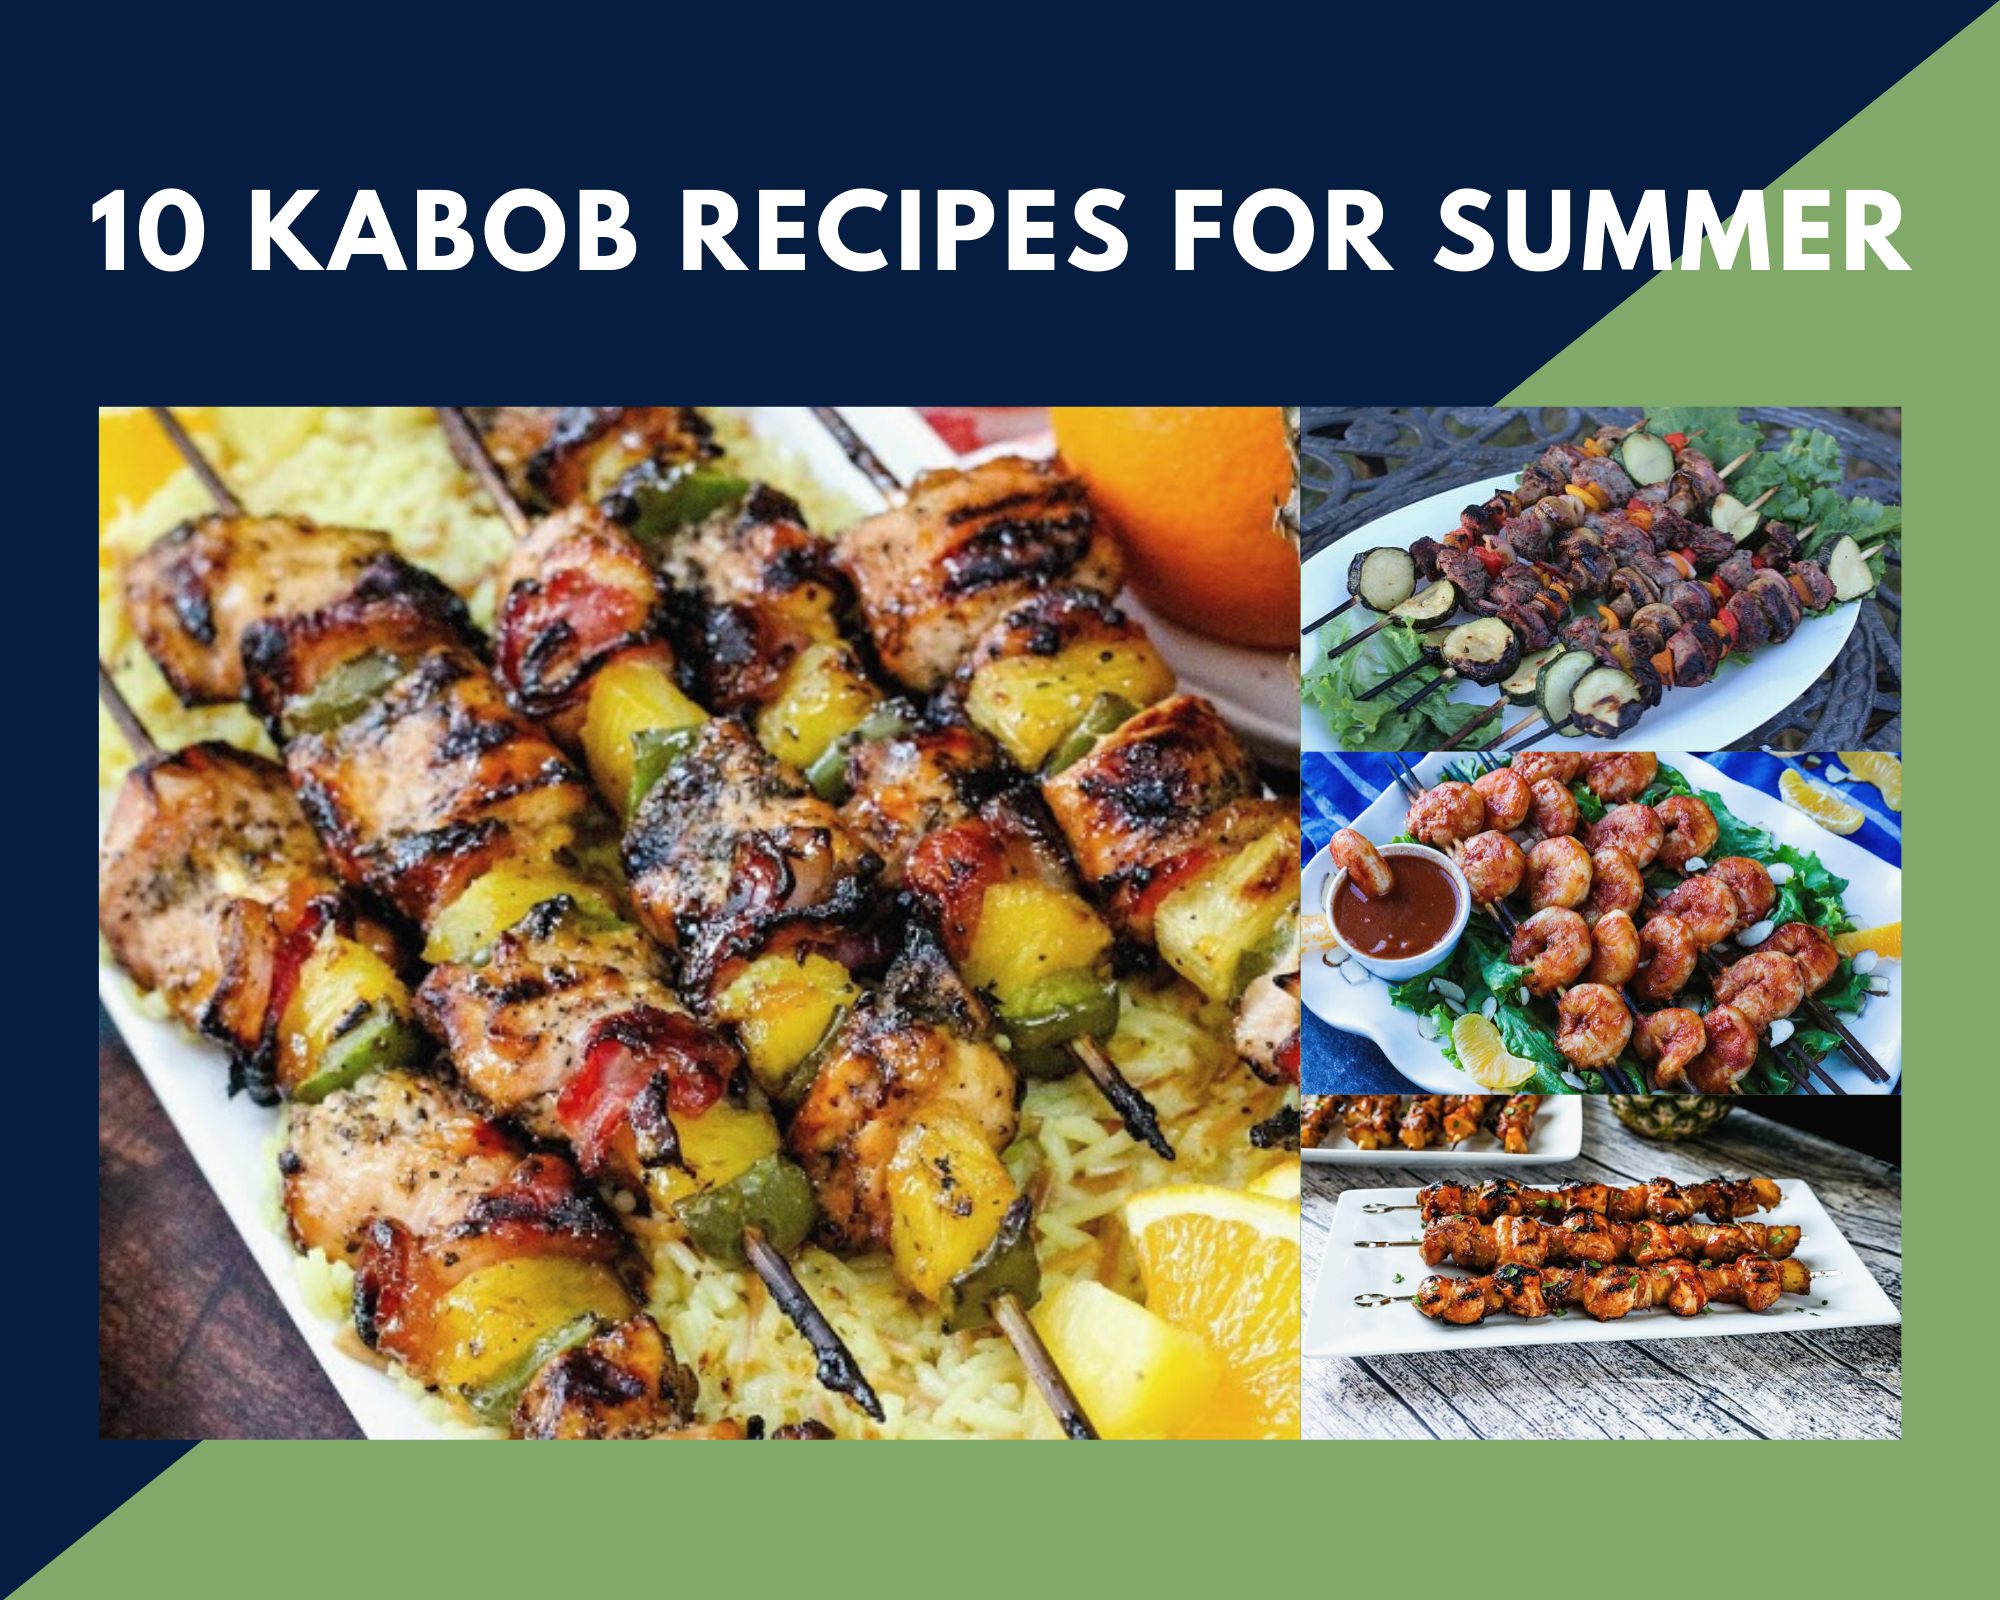 Summer grilled kabob recipes